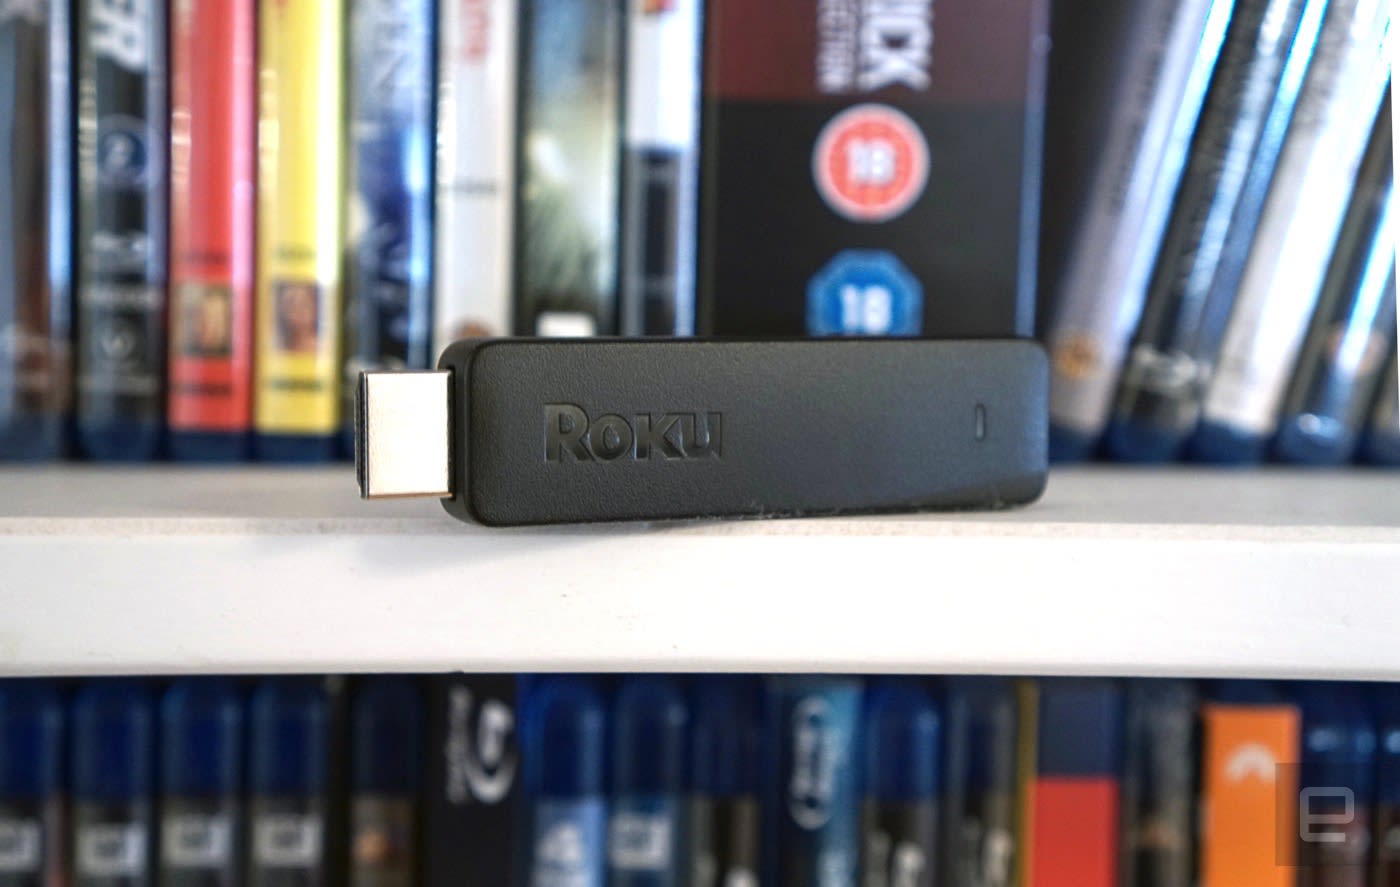 Roku's $50 Streaming Stick makes 1080p set-top boxes obsolete